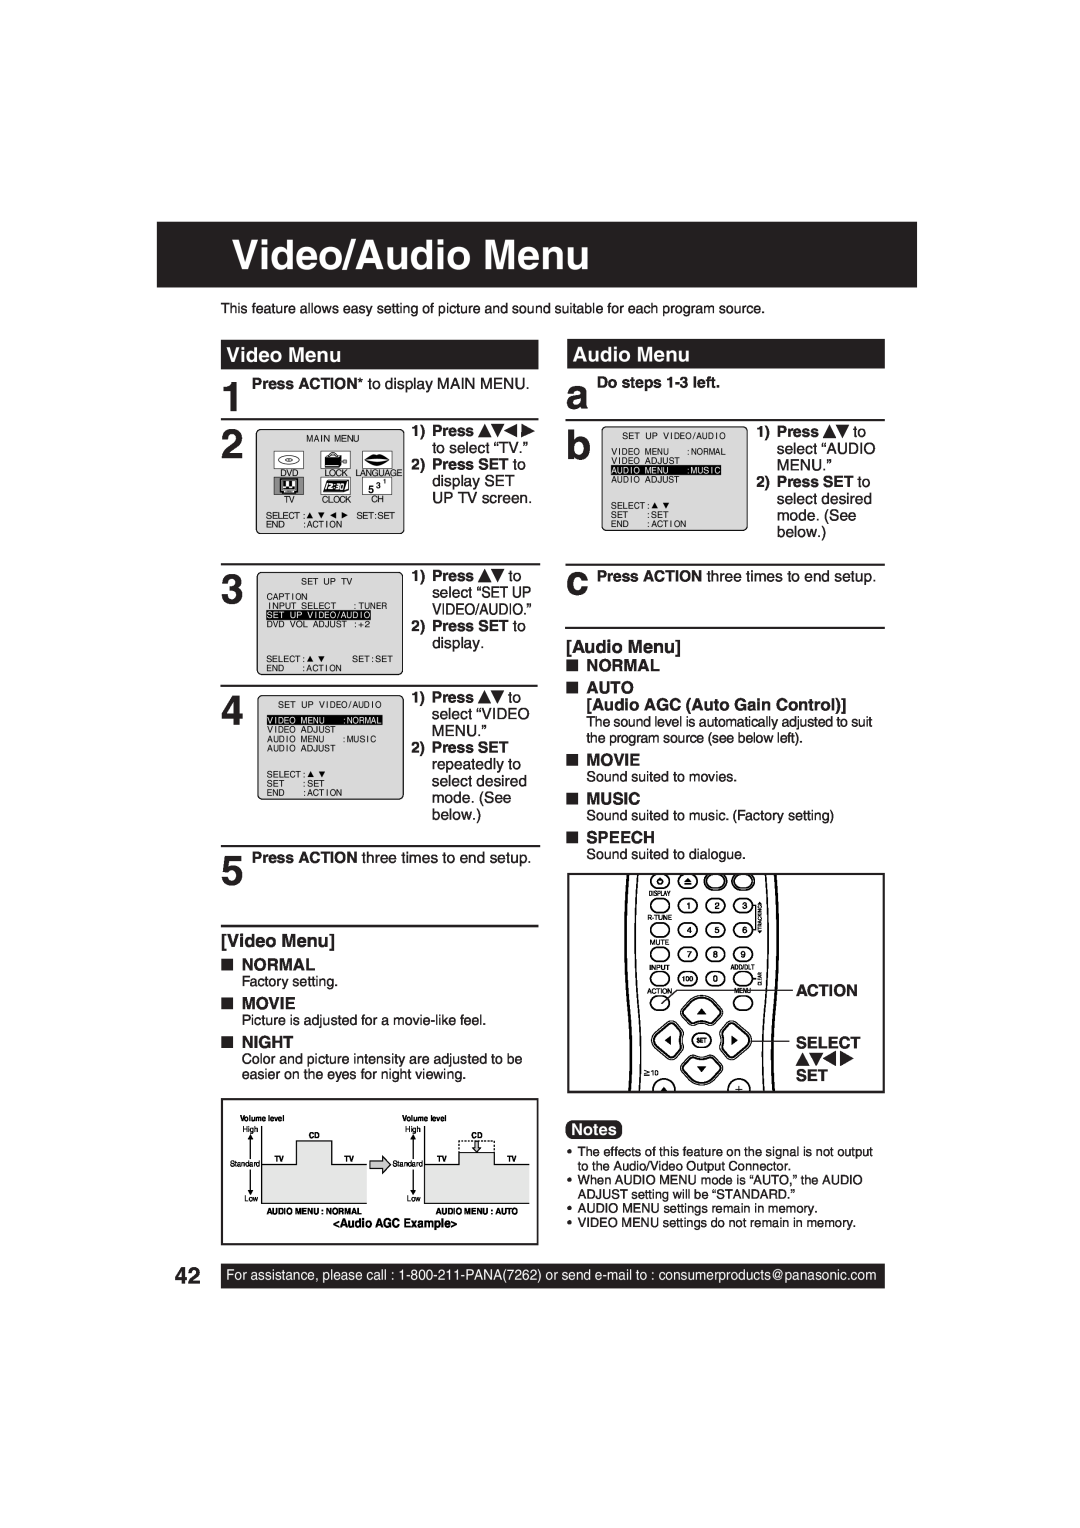 Panasonic PV-DF203 Video/Audio Menu, Video Menu, Normal, Audio AGC Auto Gain Control, Movie, Music, Speech, Night 